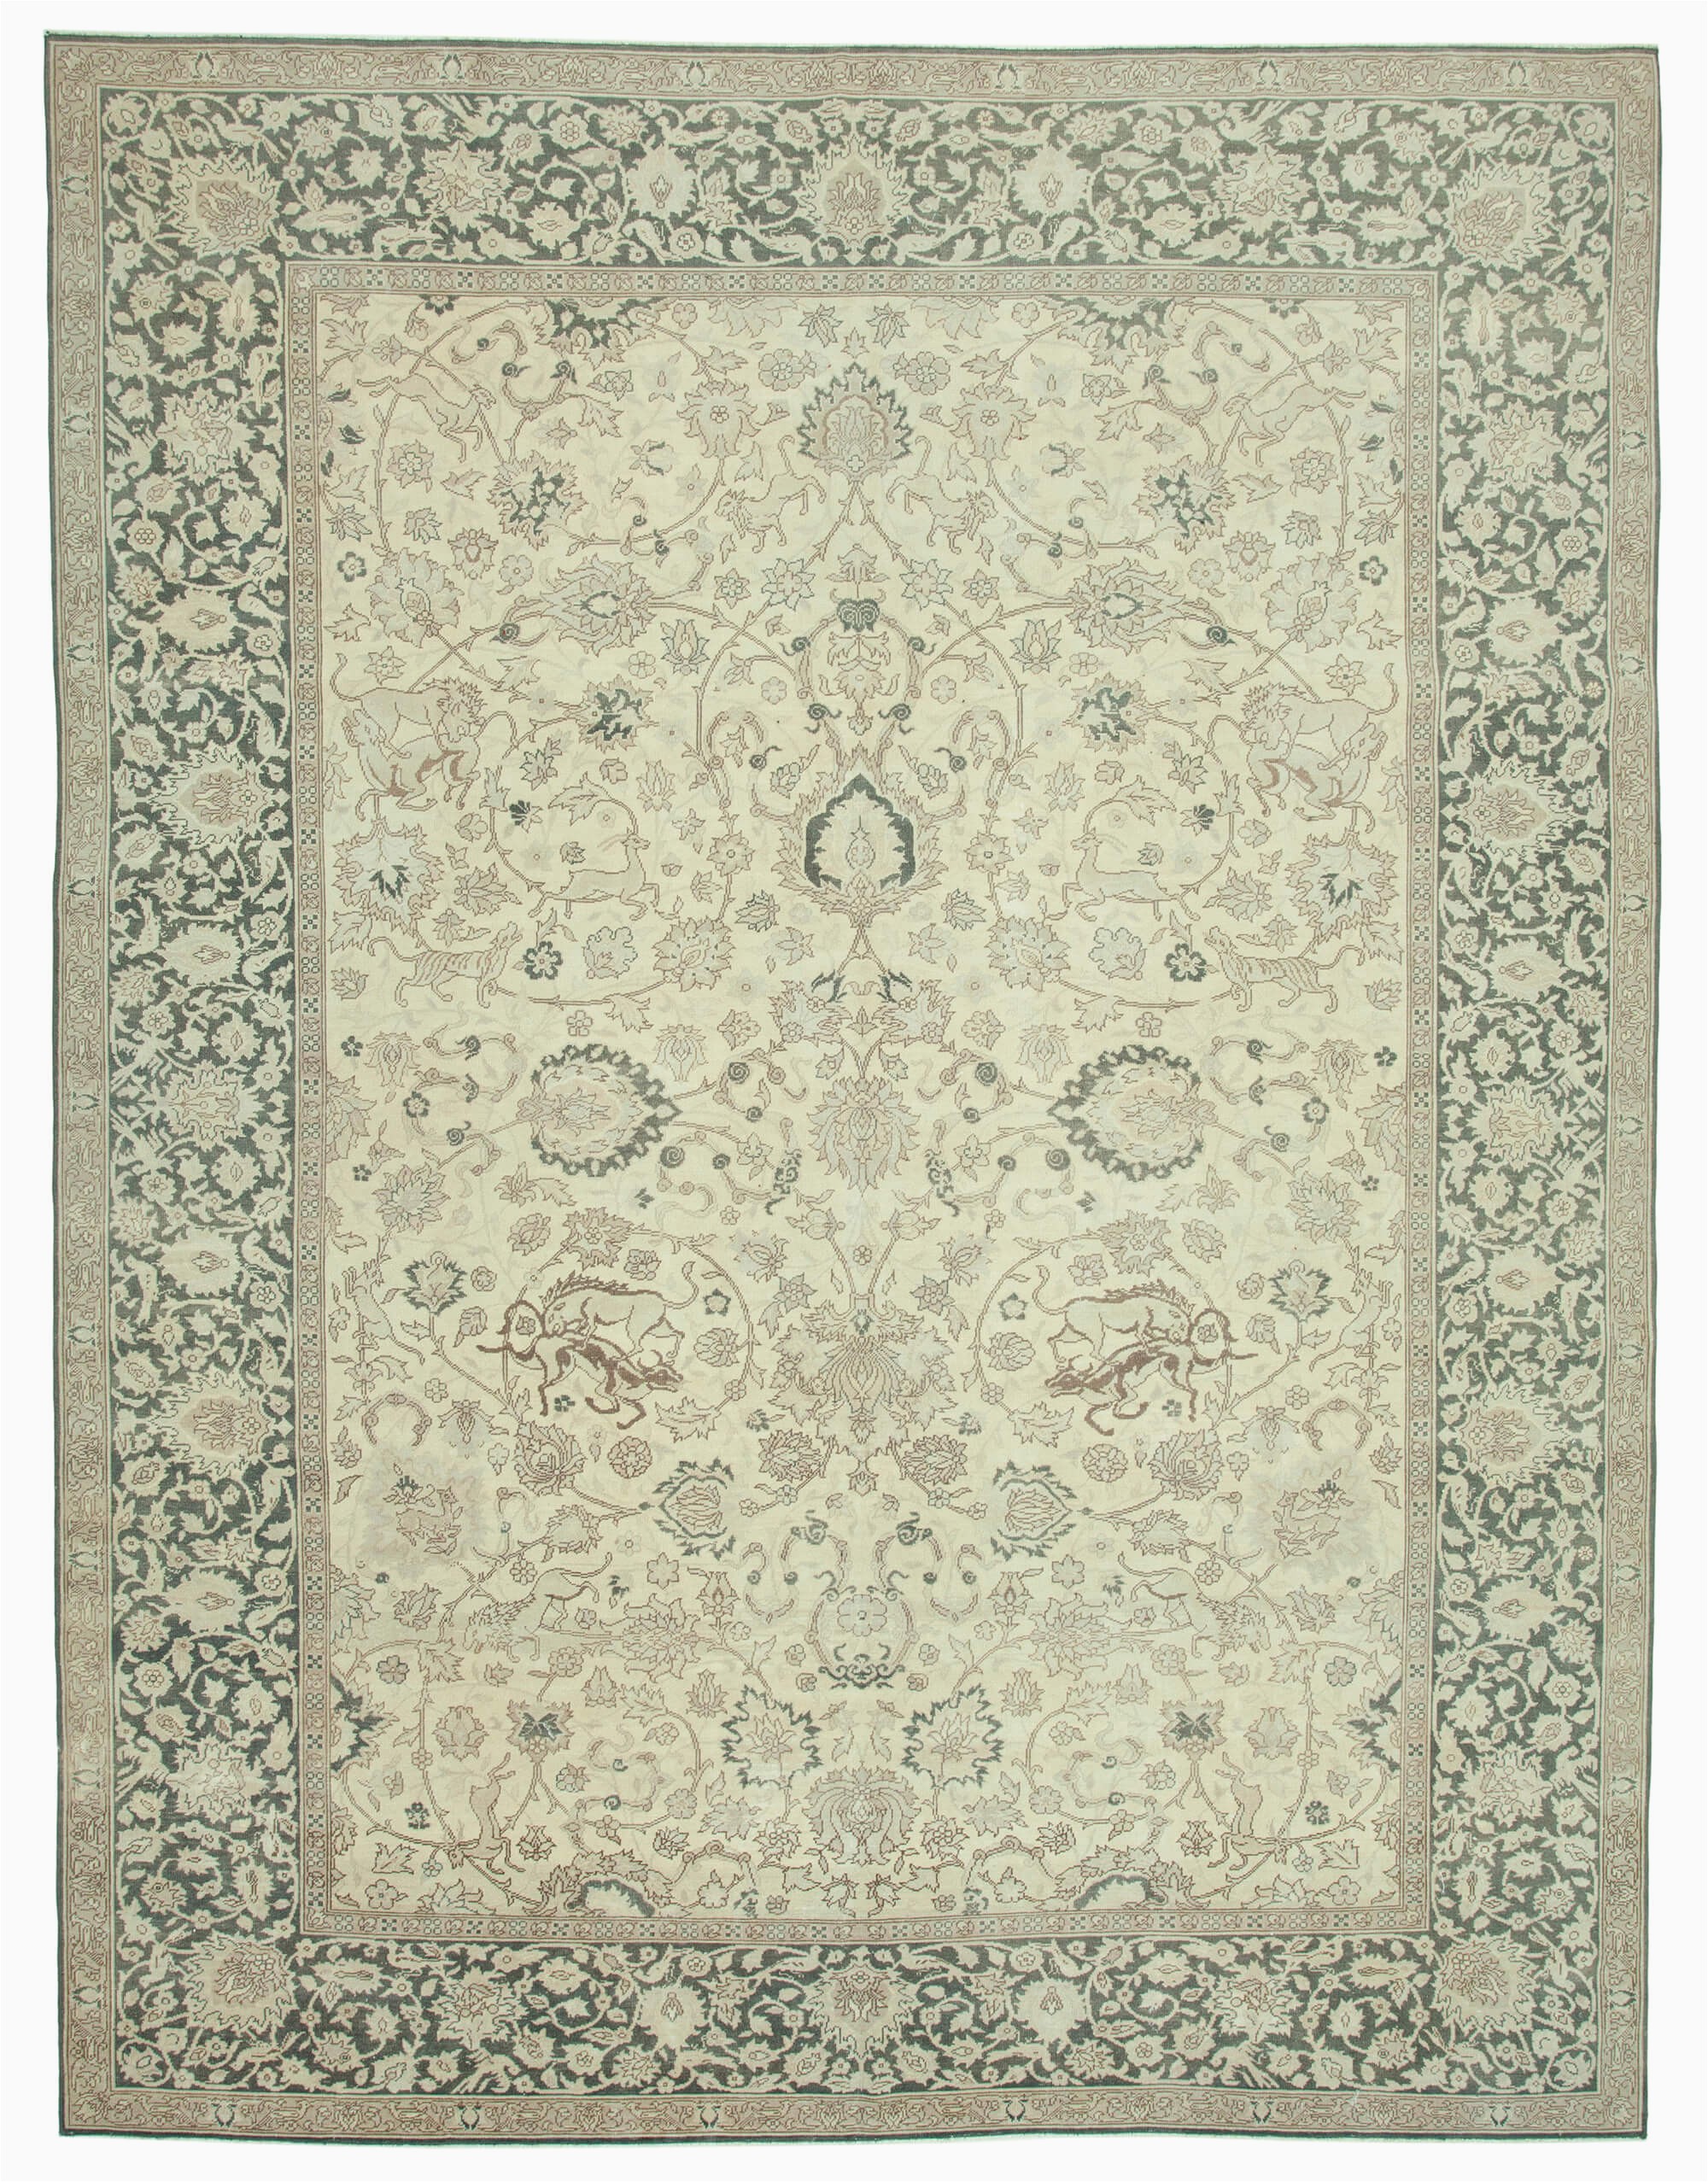 10x12 beige vintage large area rug